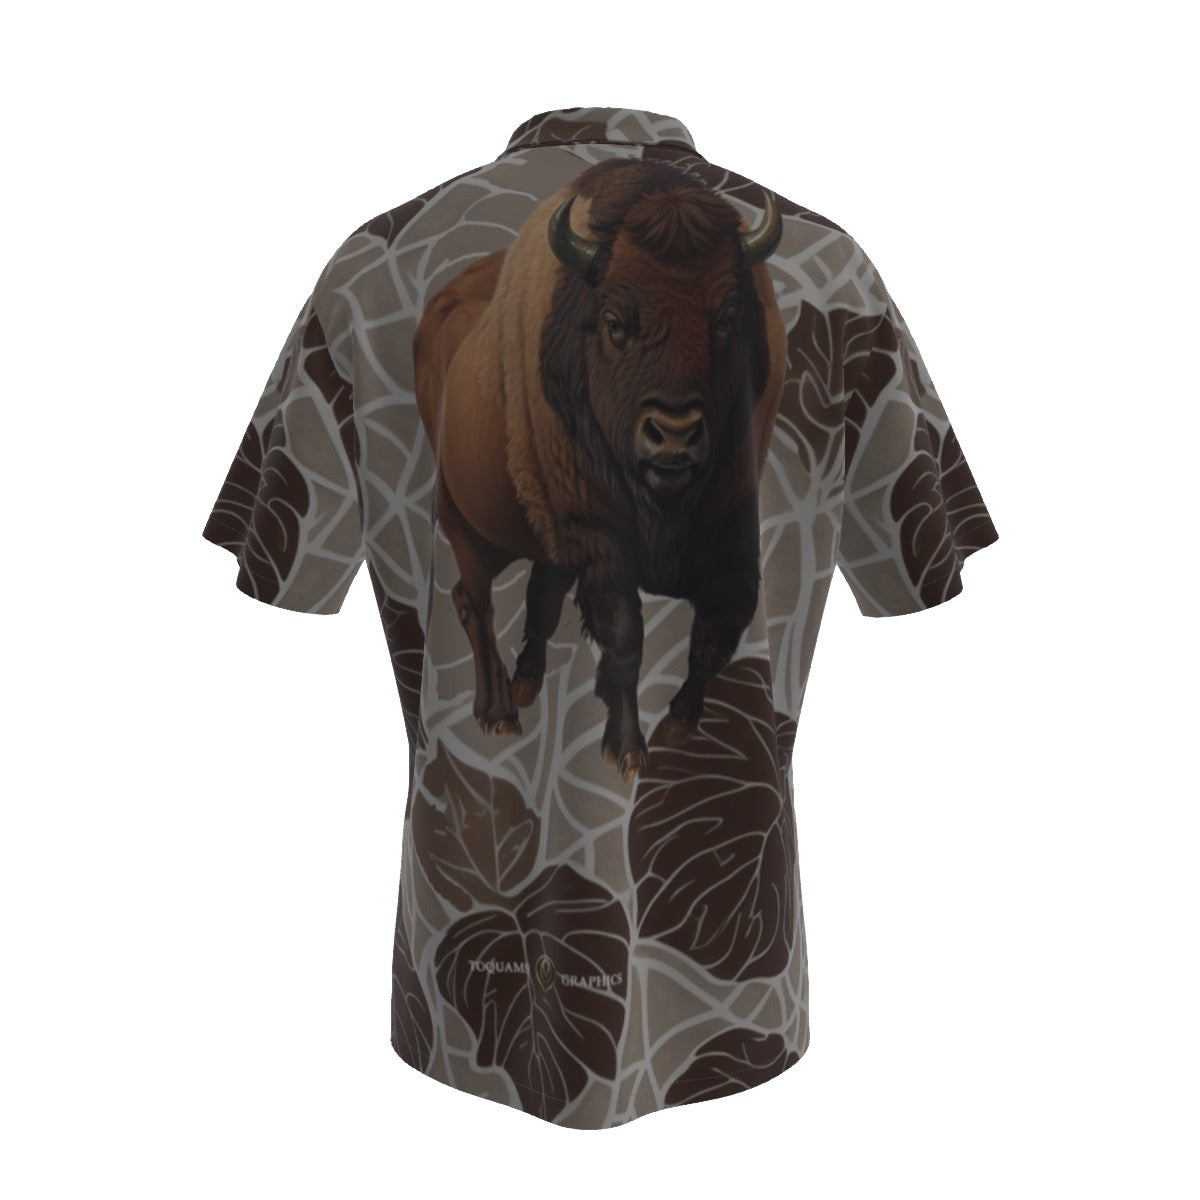 Bison -- Men's Hawaiian Shirt With Pocket